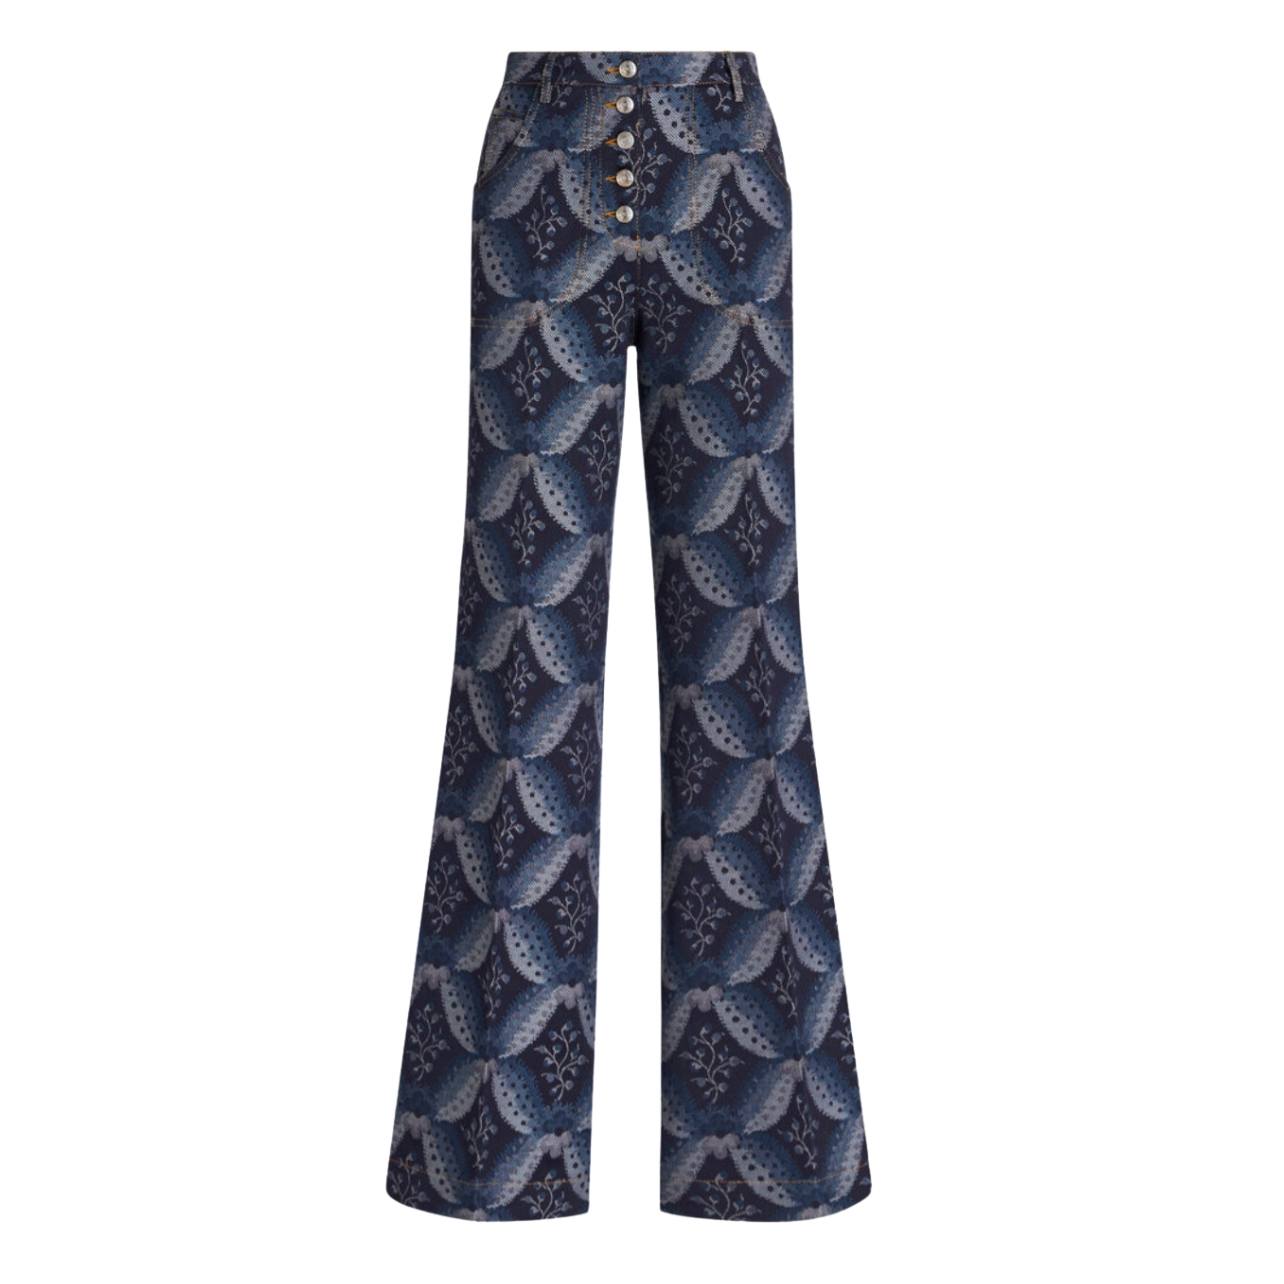 Flared denim jacquard jeans embellished by ton-sur-ton Floralia patterns